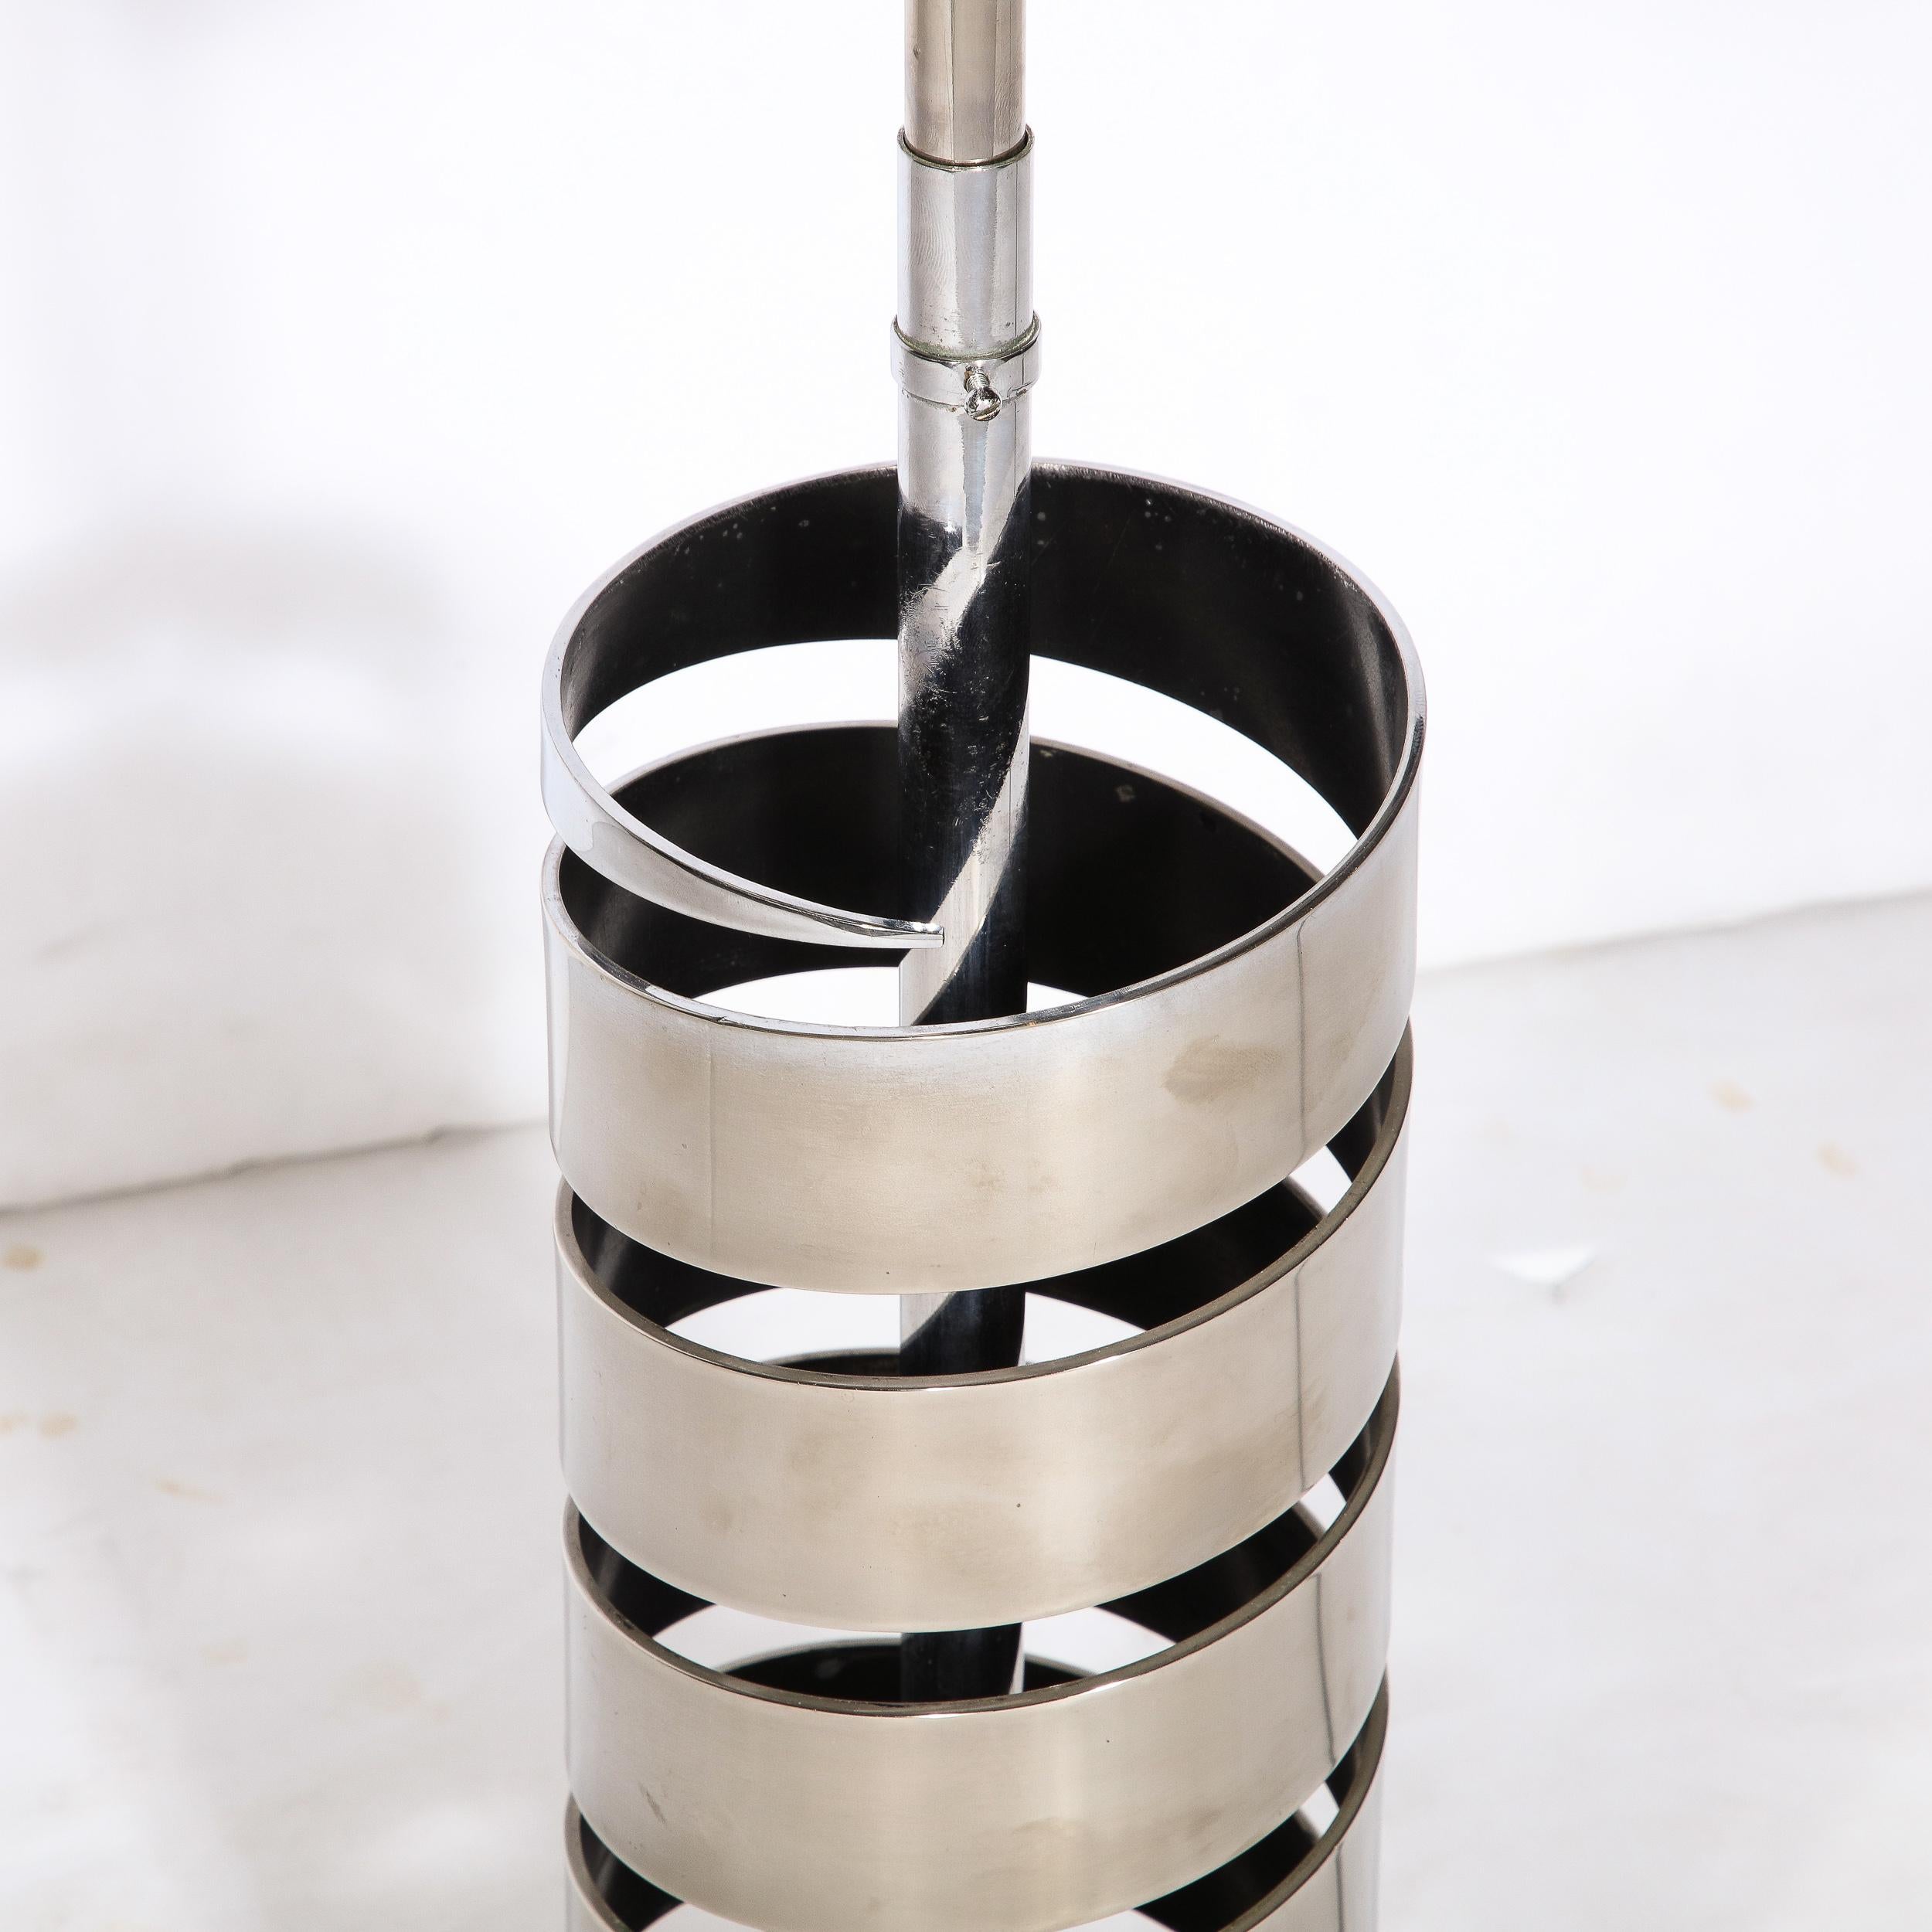 Modernist Torqued Spiral Form Table Lamp in Satin Nickel For Sale 7